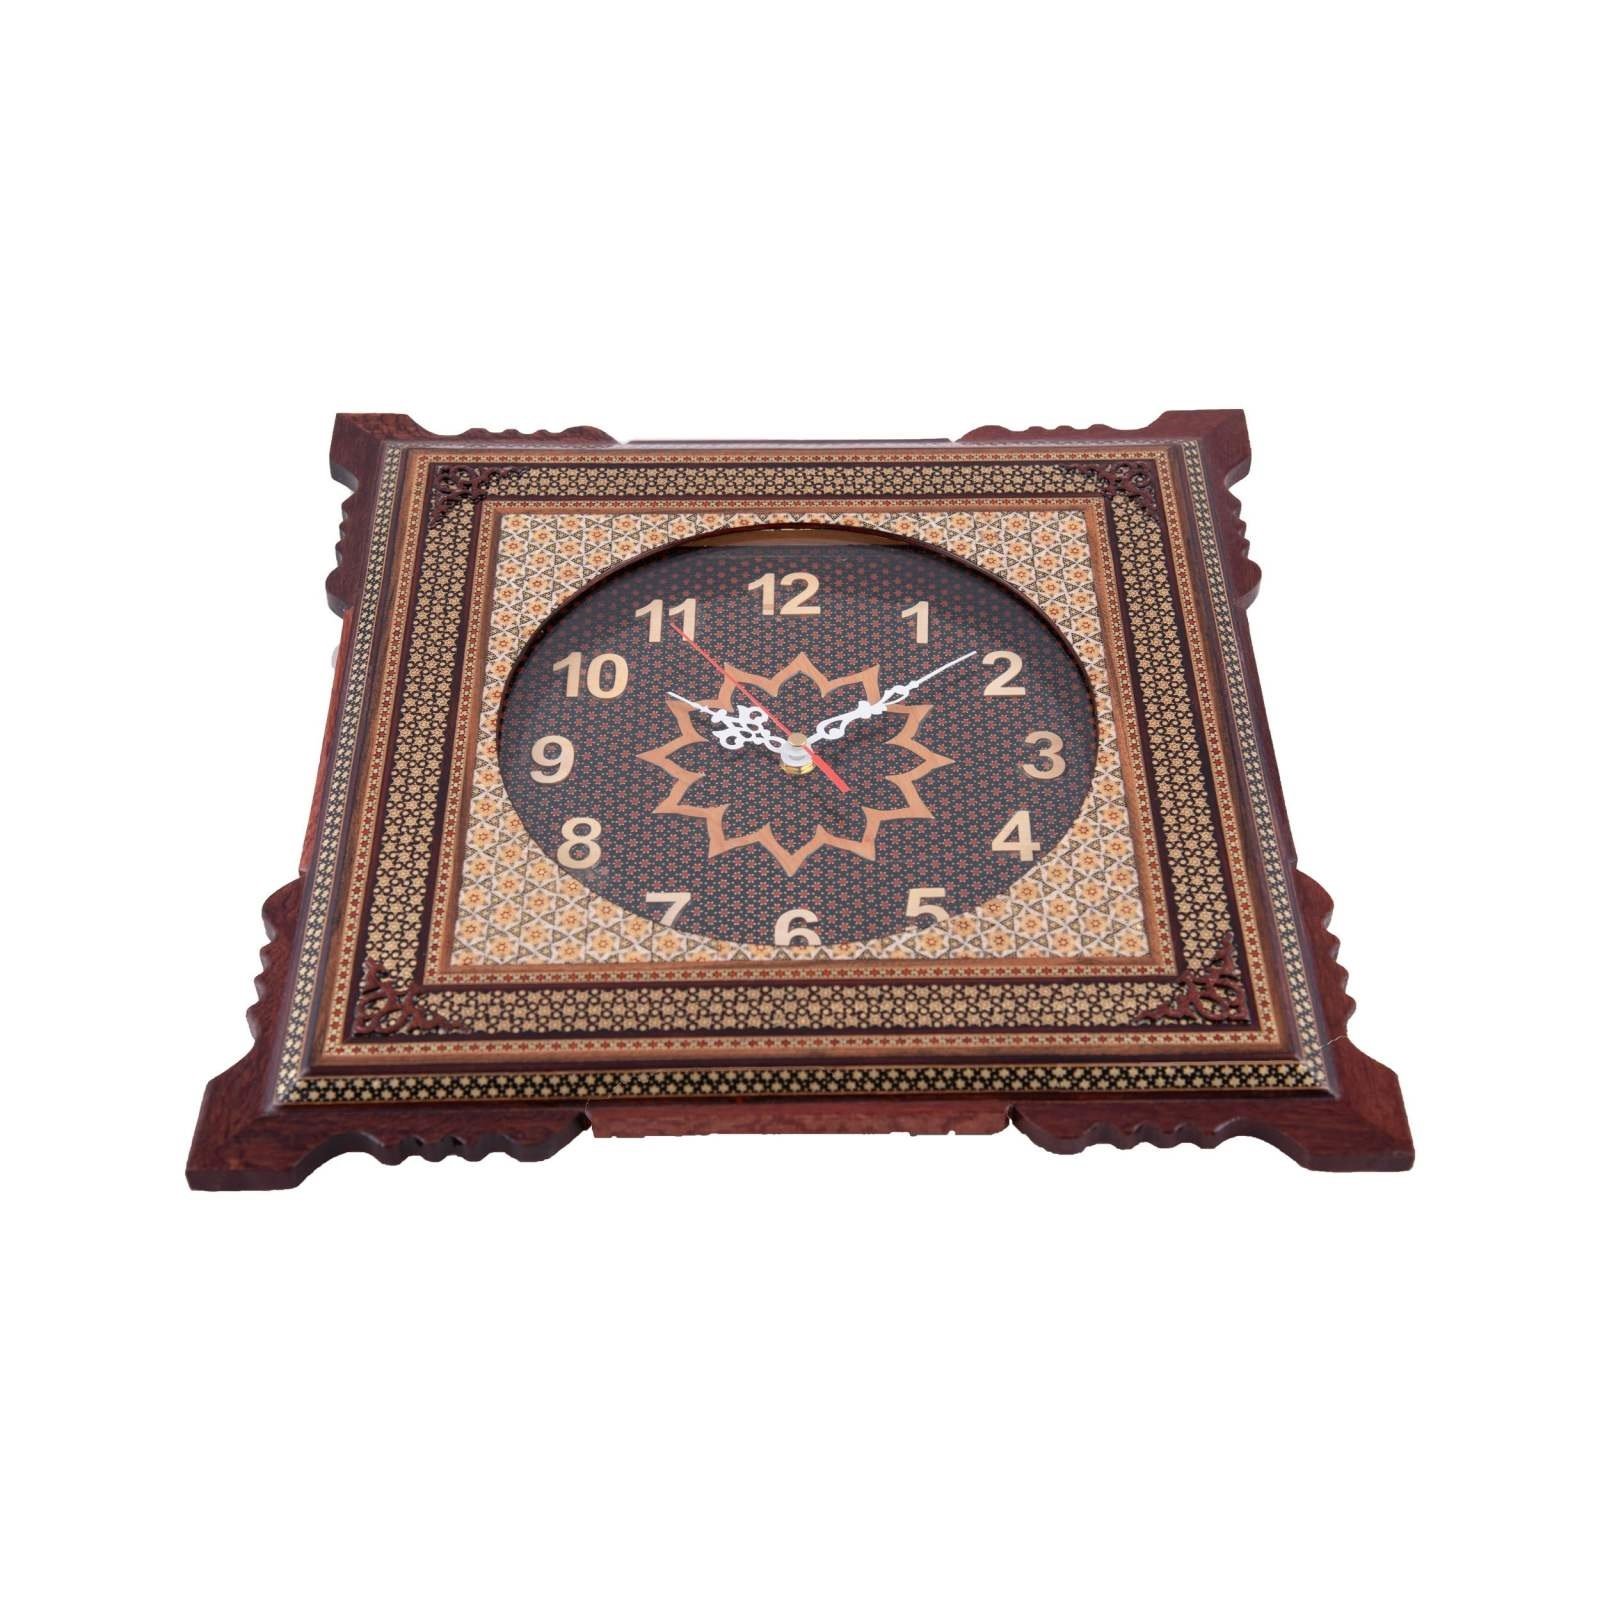 Khatam clock Model k22 Code 25 , Khatam clock, Inlaid, Khatam clock model, Khatam